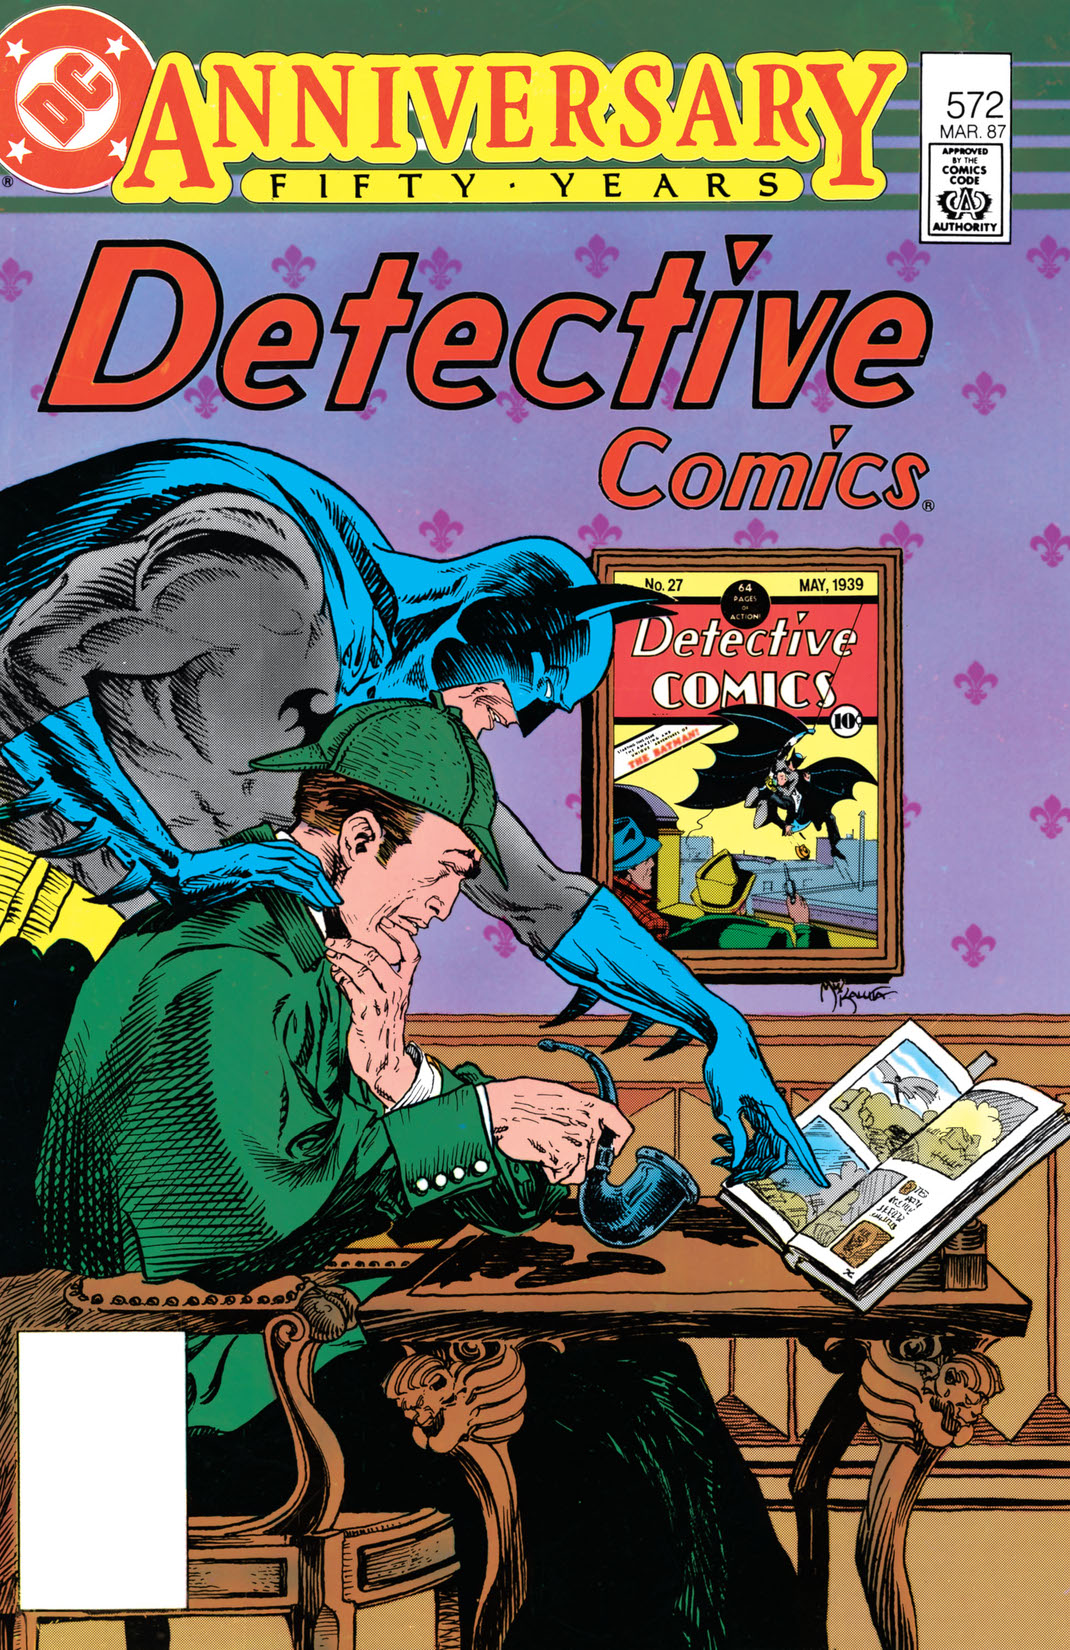 Detective Comics (1937-) #572 preview images